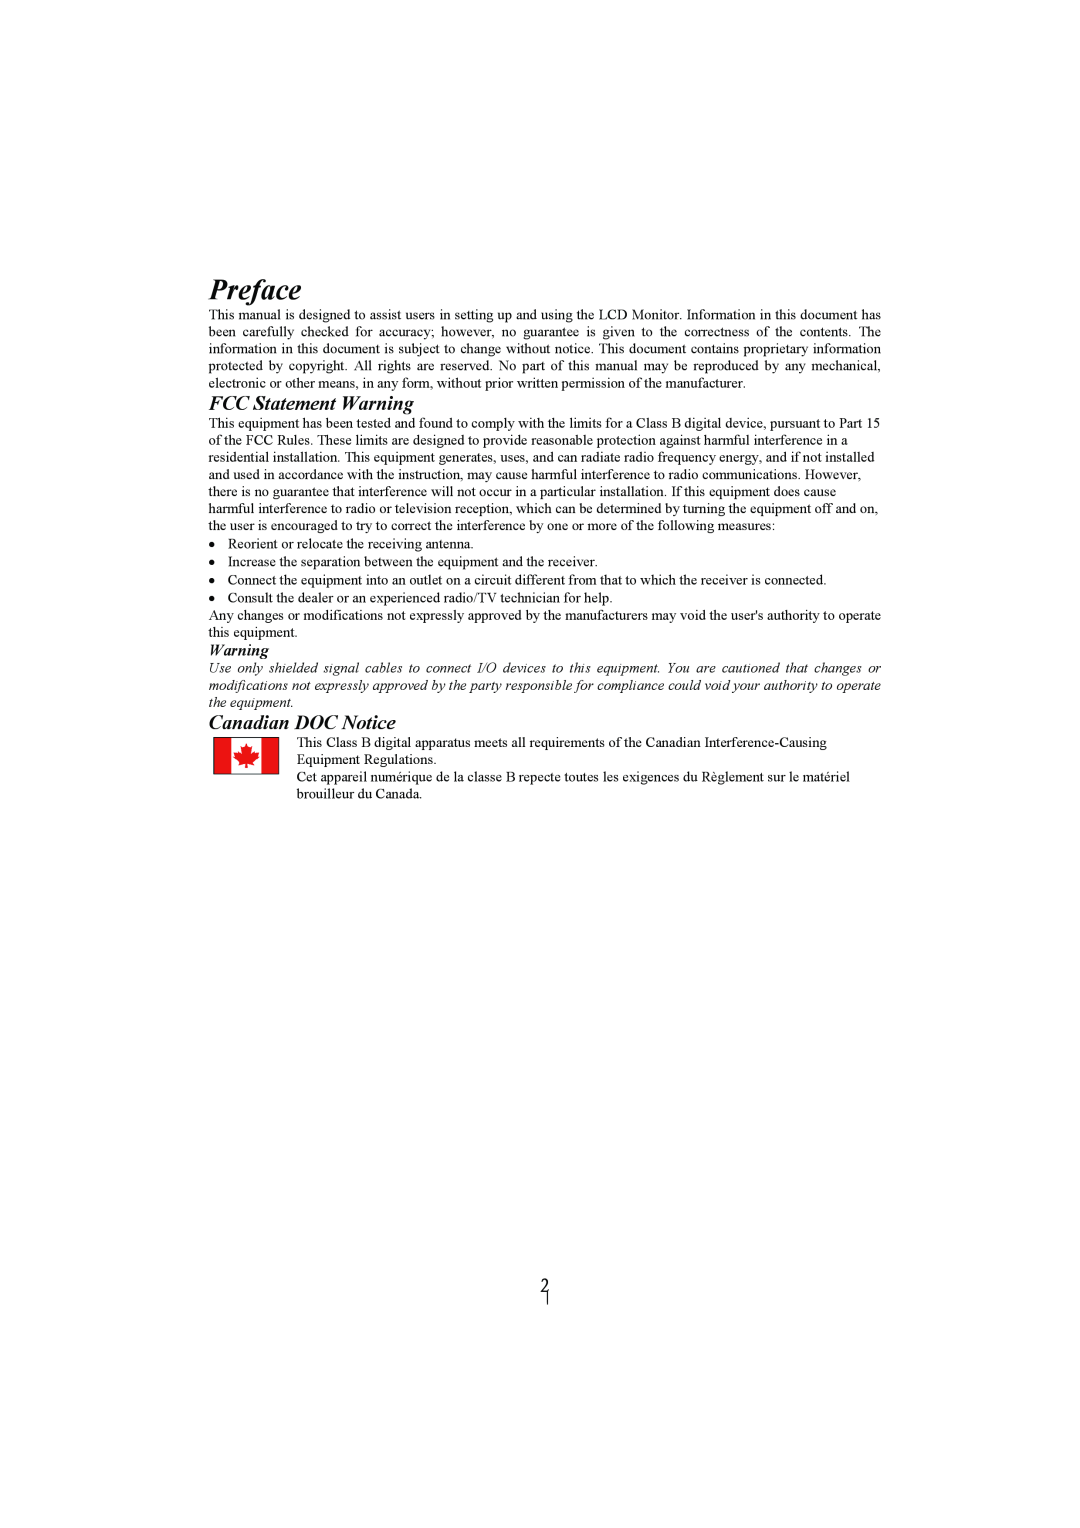 Planar PL2010M manual Preface, FCC Statement Warning, Canadian DOC Notice 